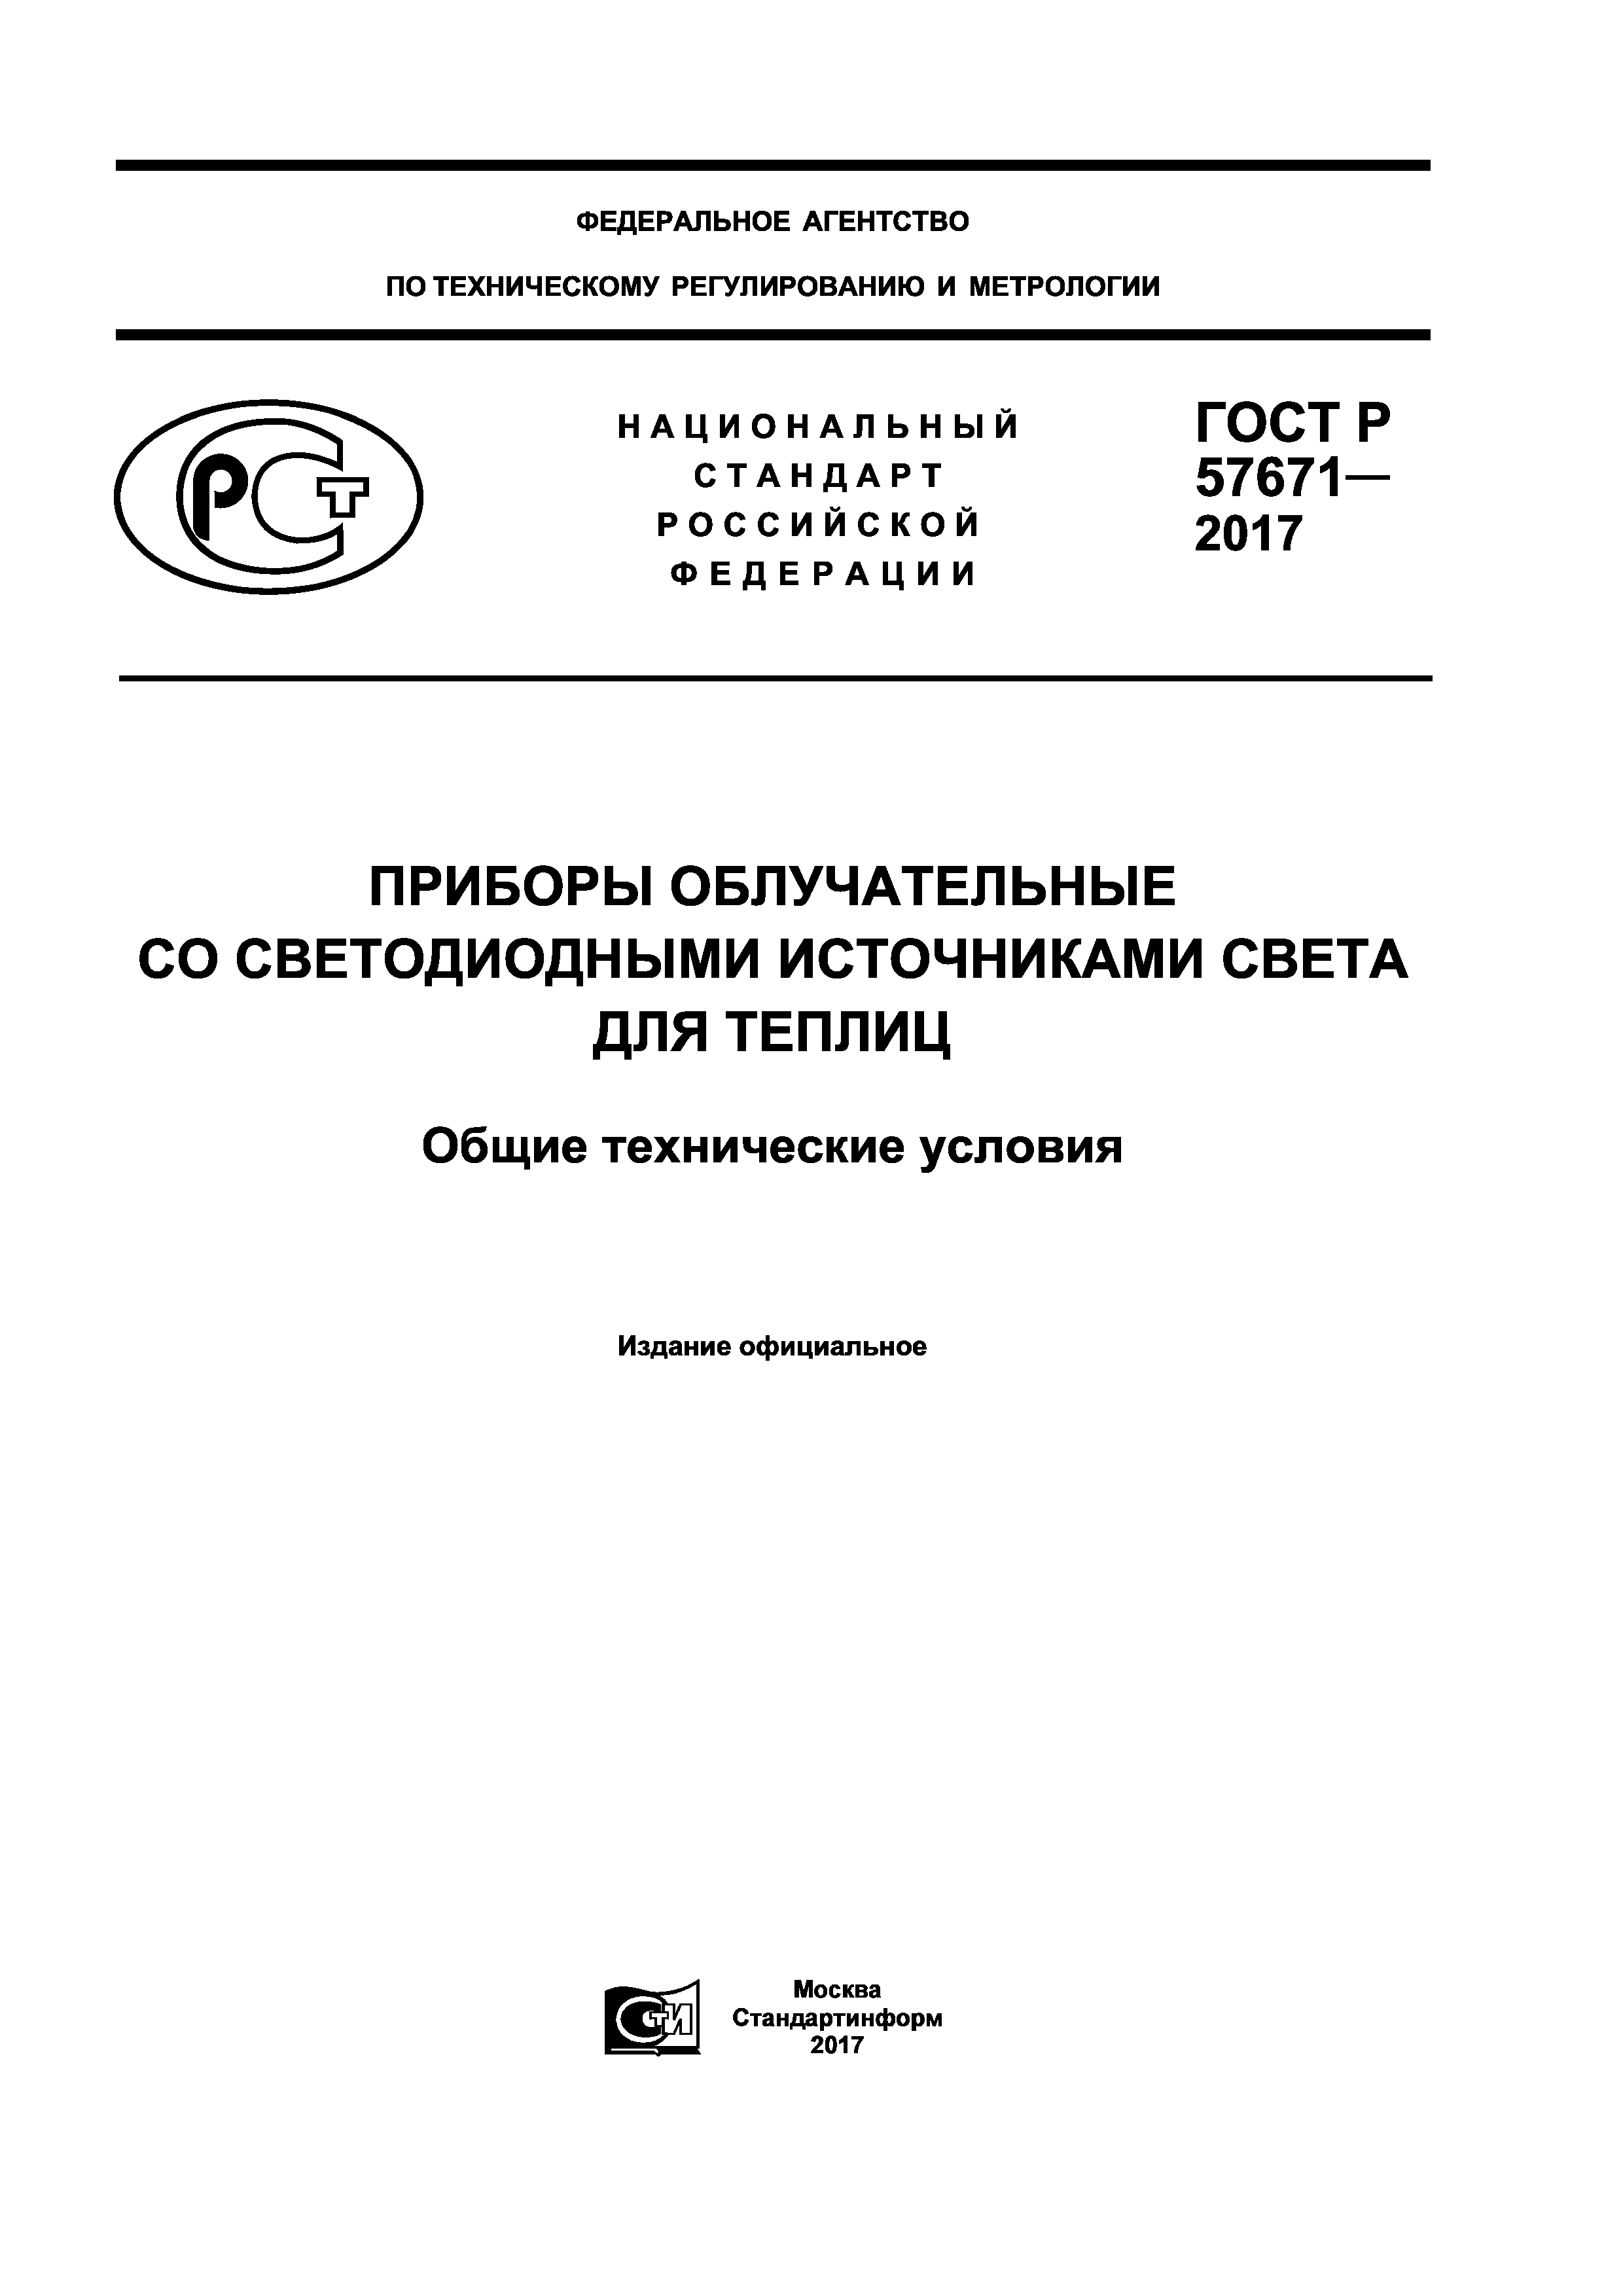 ГОСТ Р 57671-2017